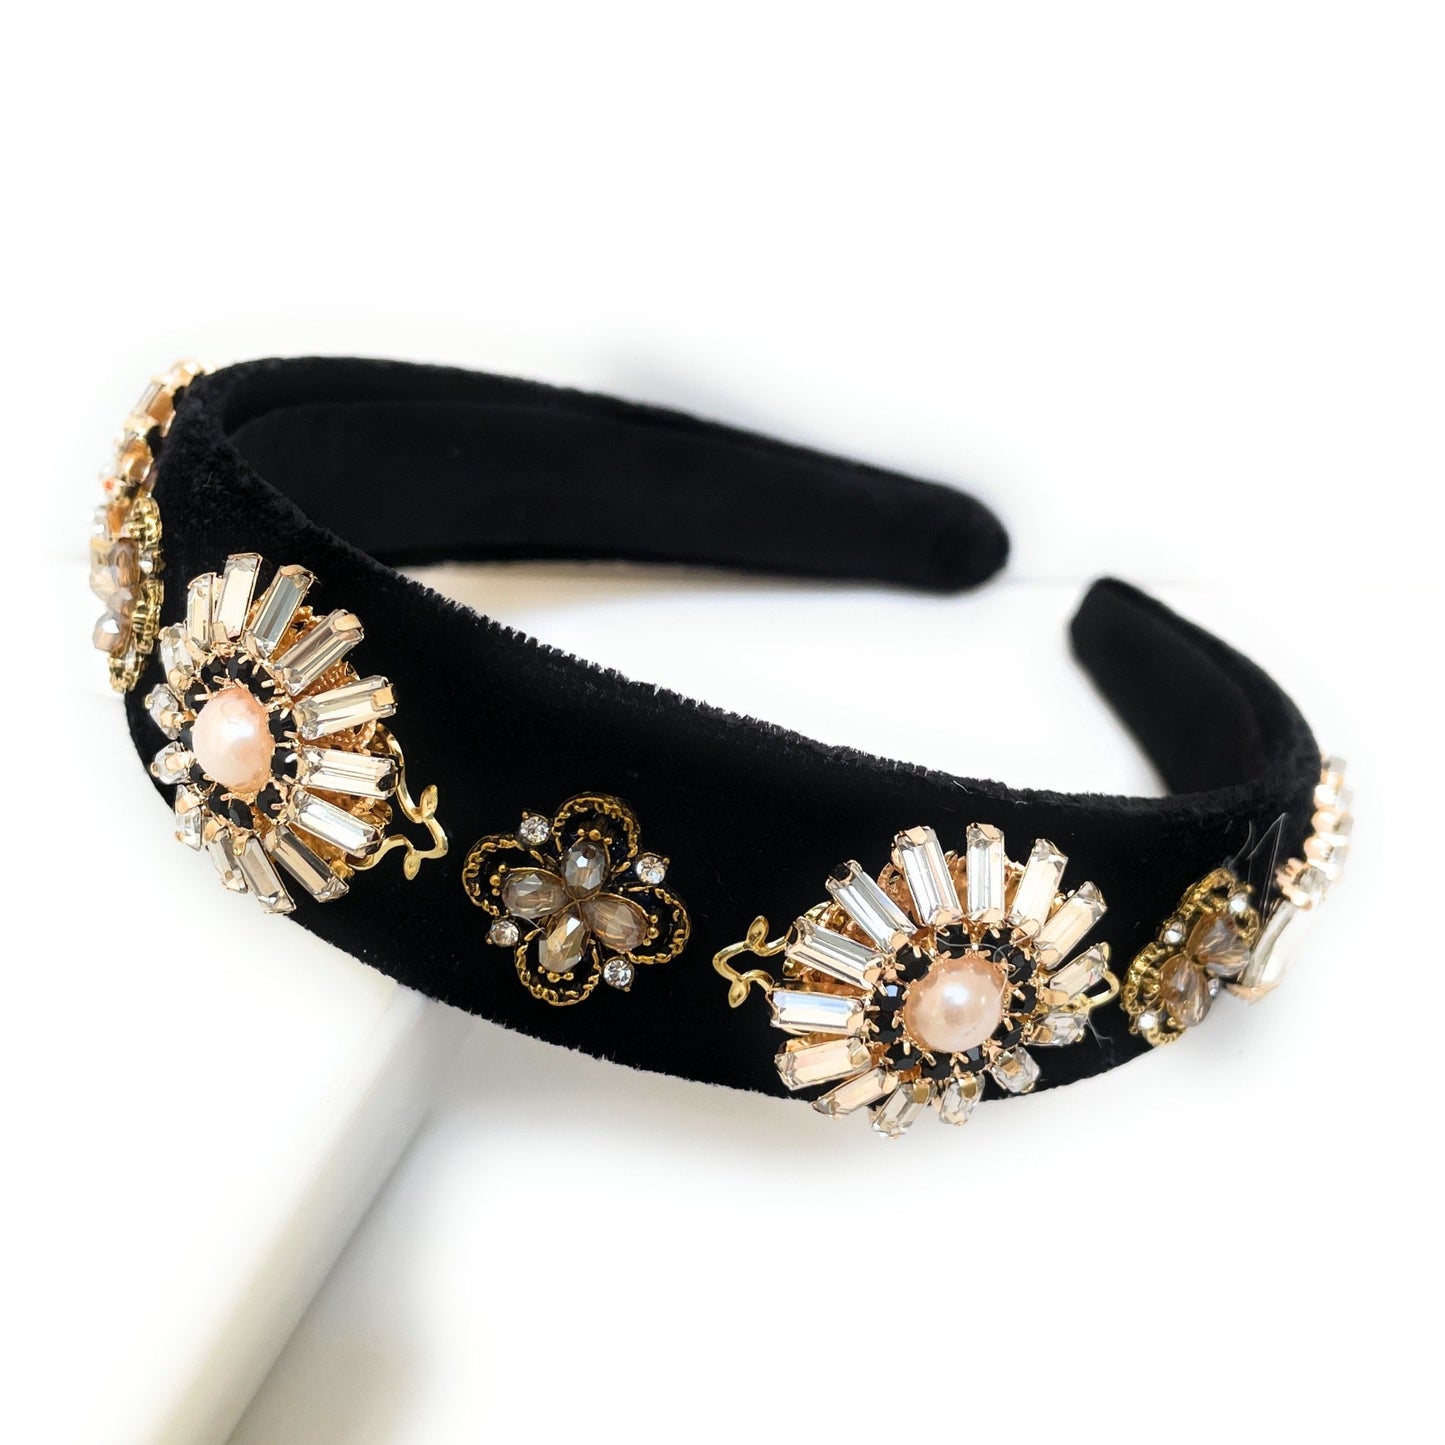 Edith Jeweled Headband